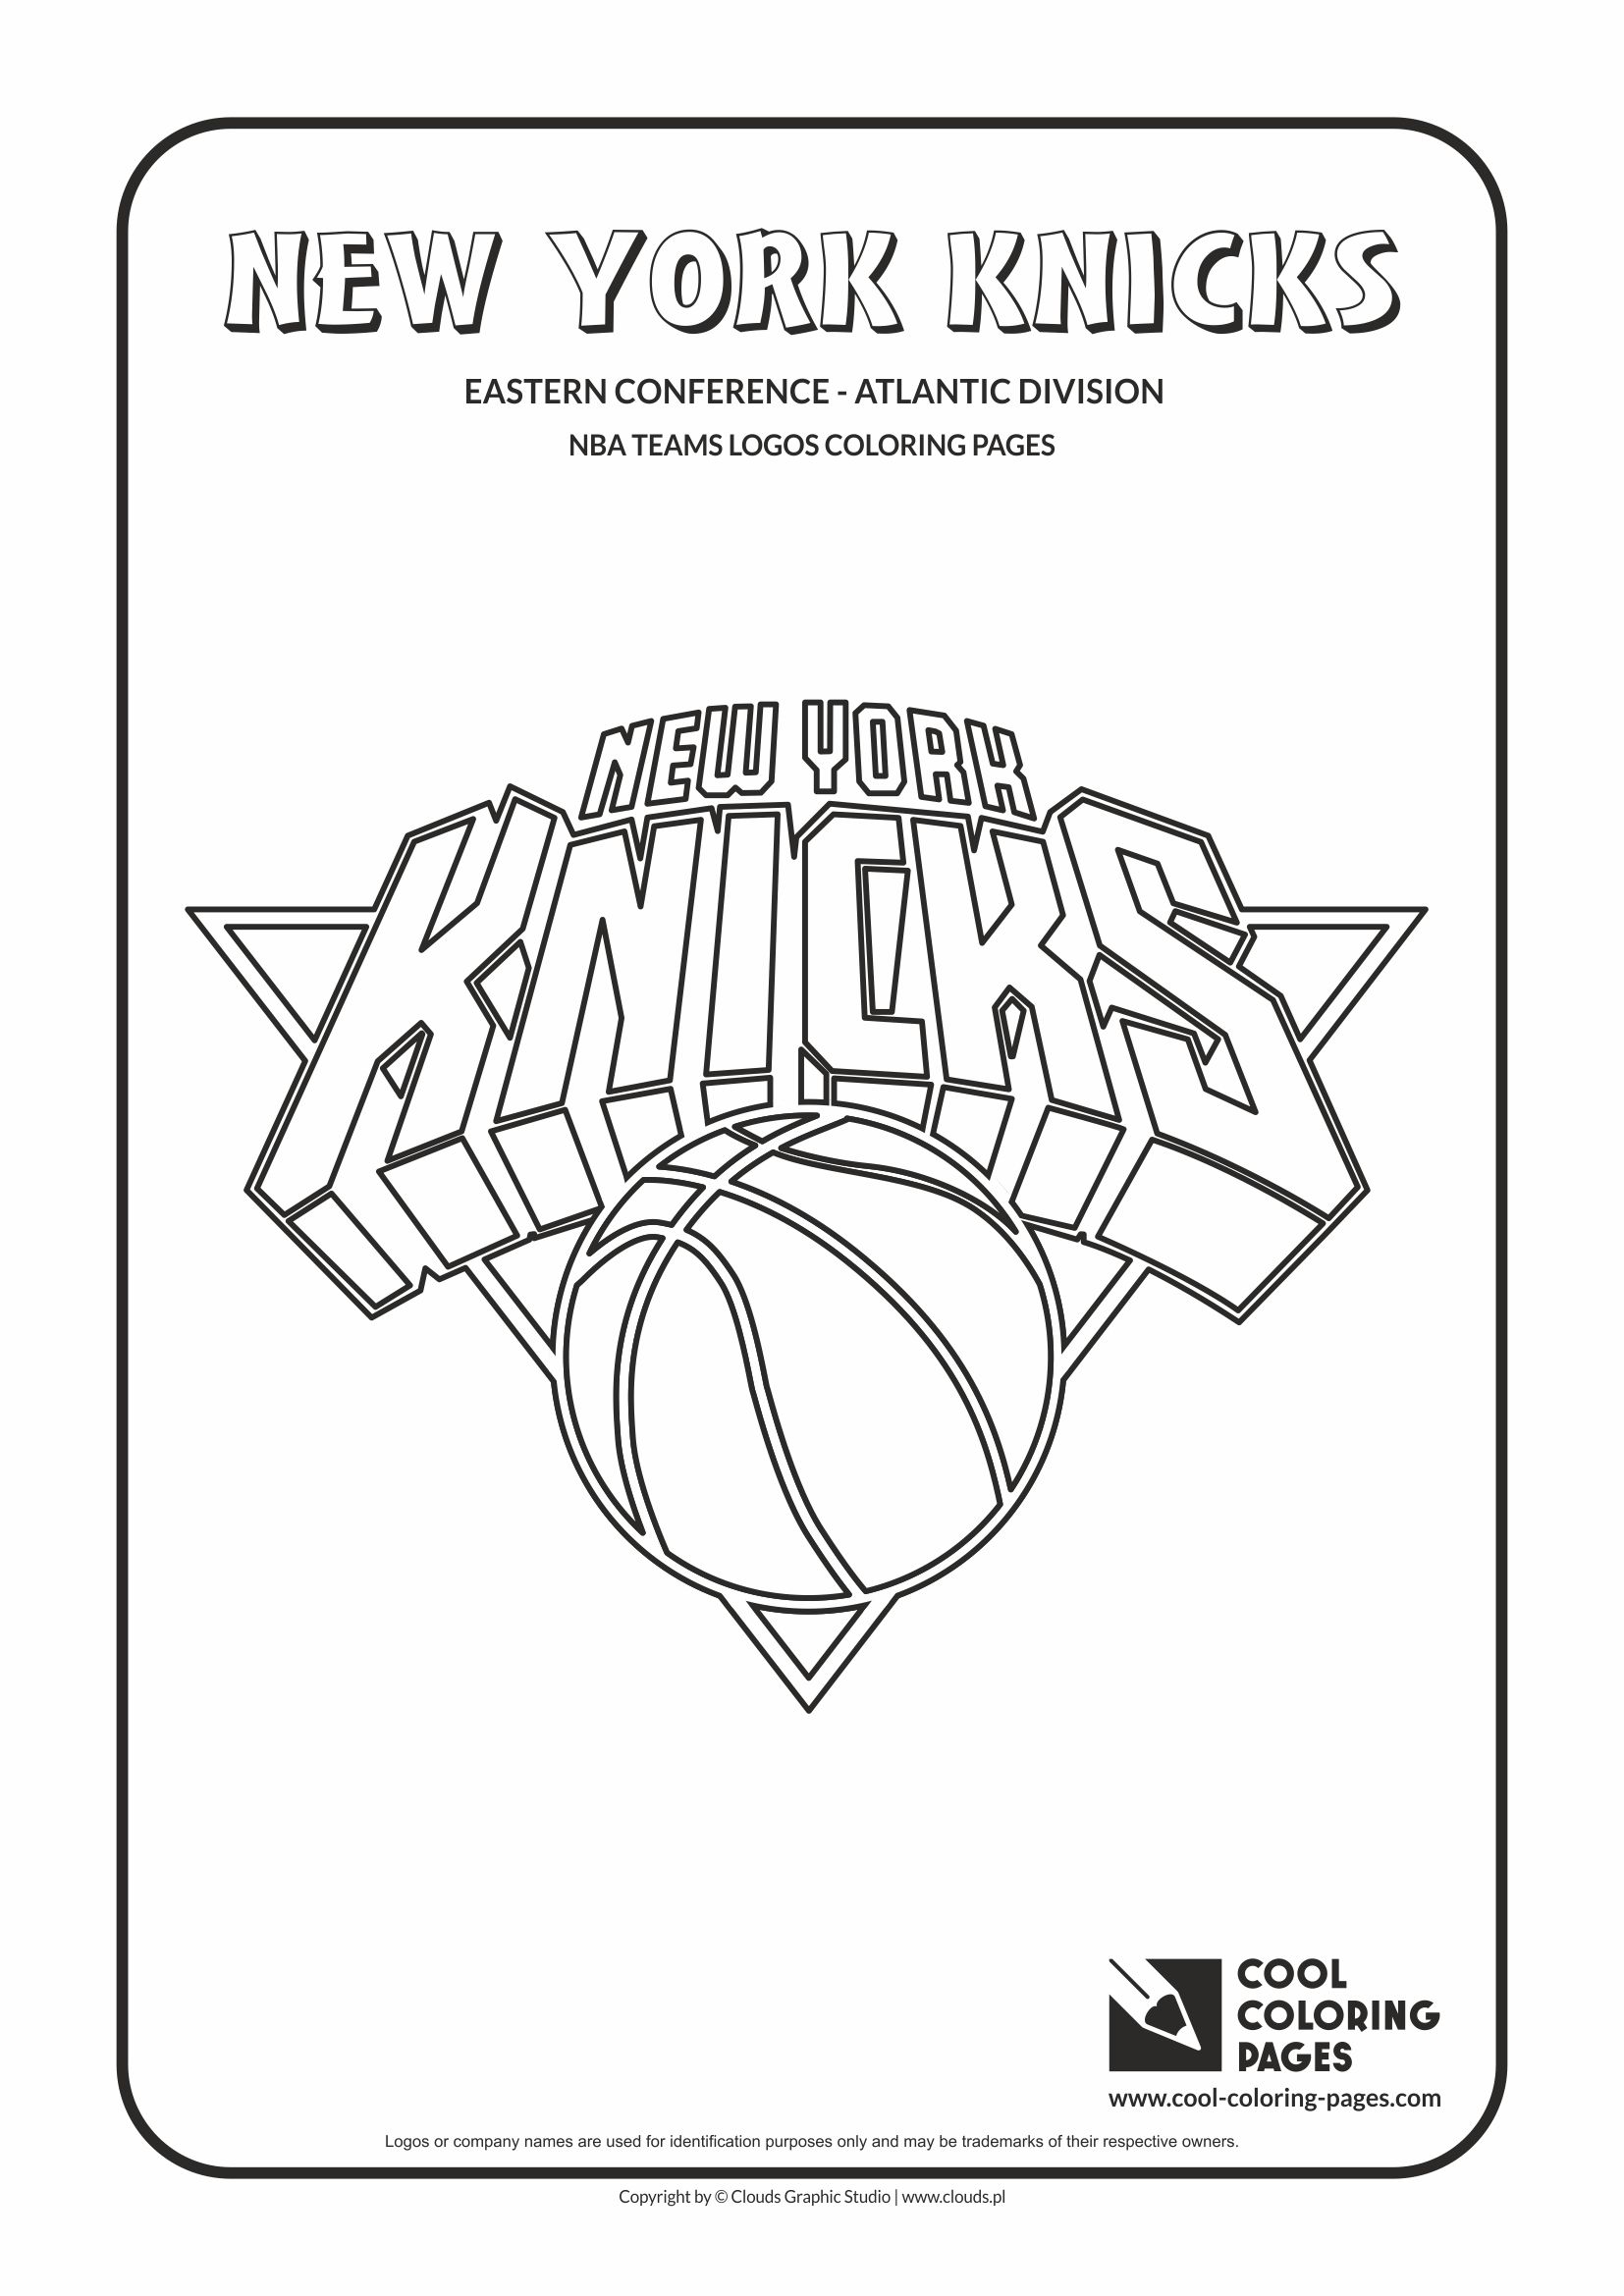 Cool Coloring Pages - NBA Teams Logos / New York Knicks logo / Coloring page with New York Knicks logo